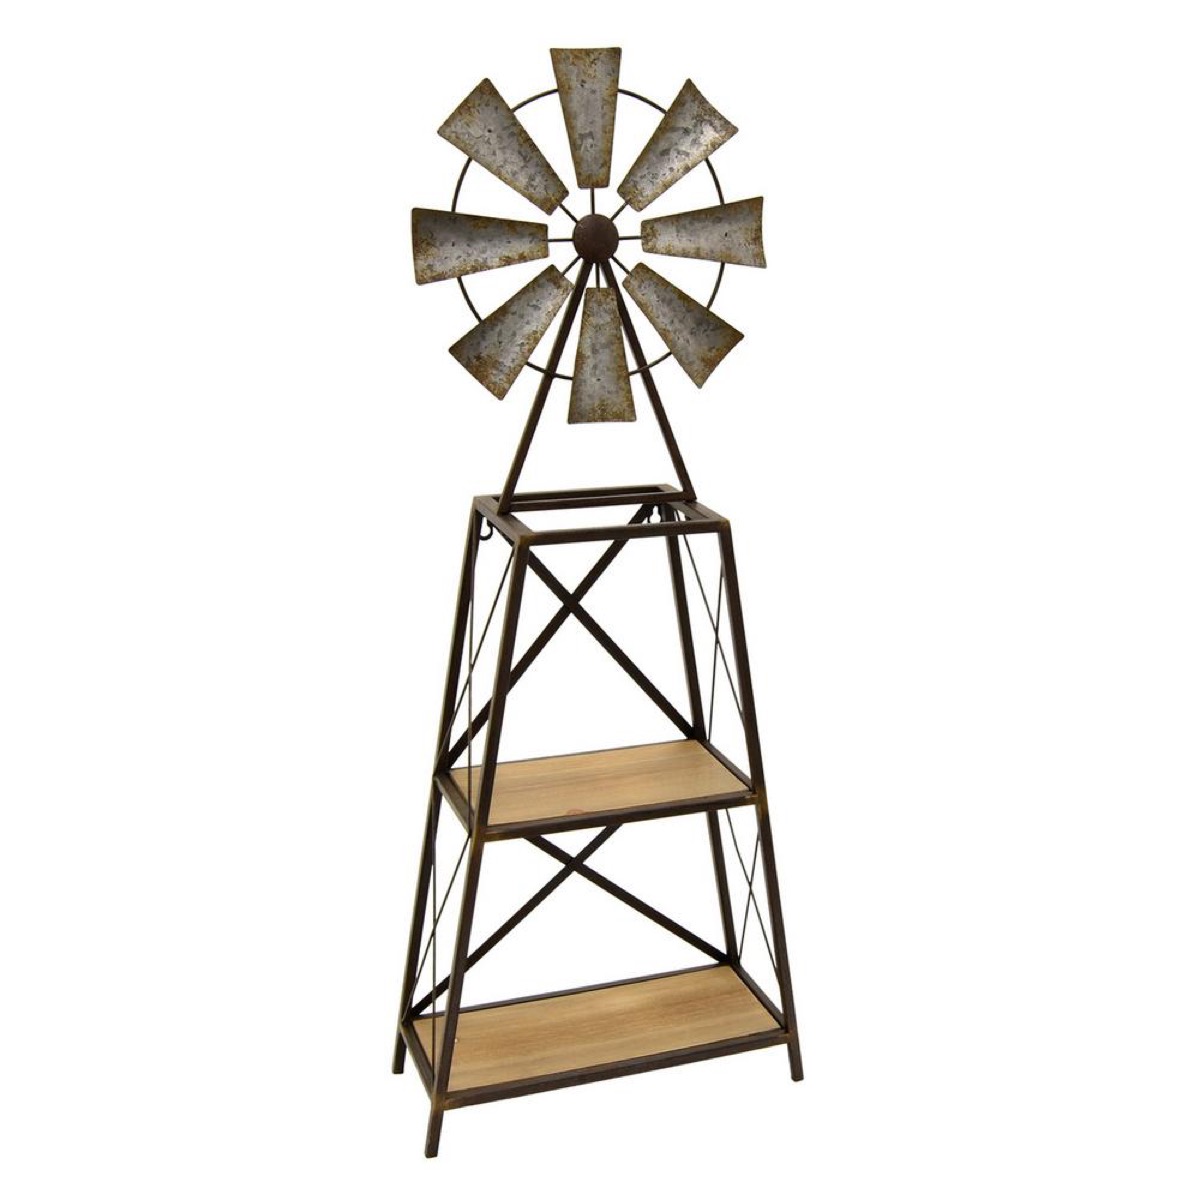 A Rustic Windmill Bookshelf Home Depot